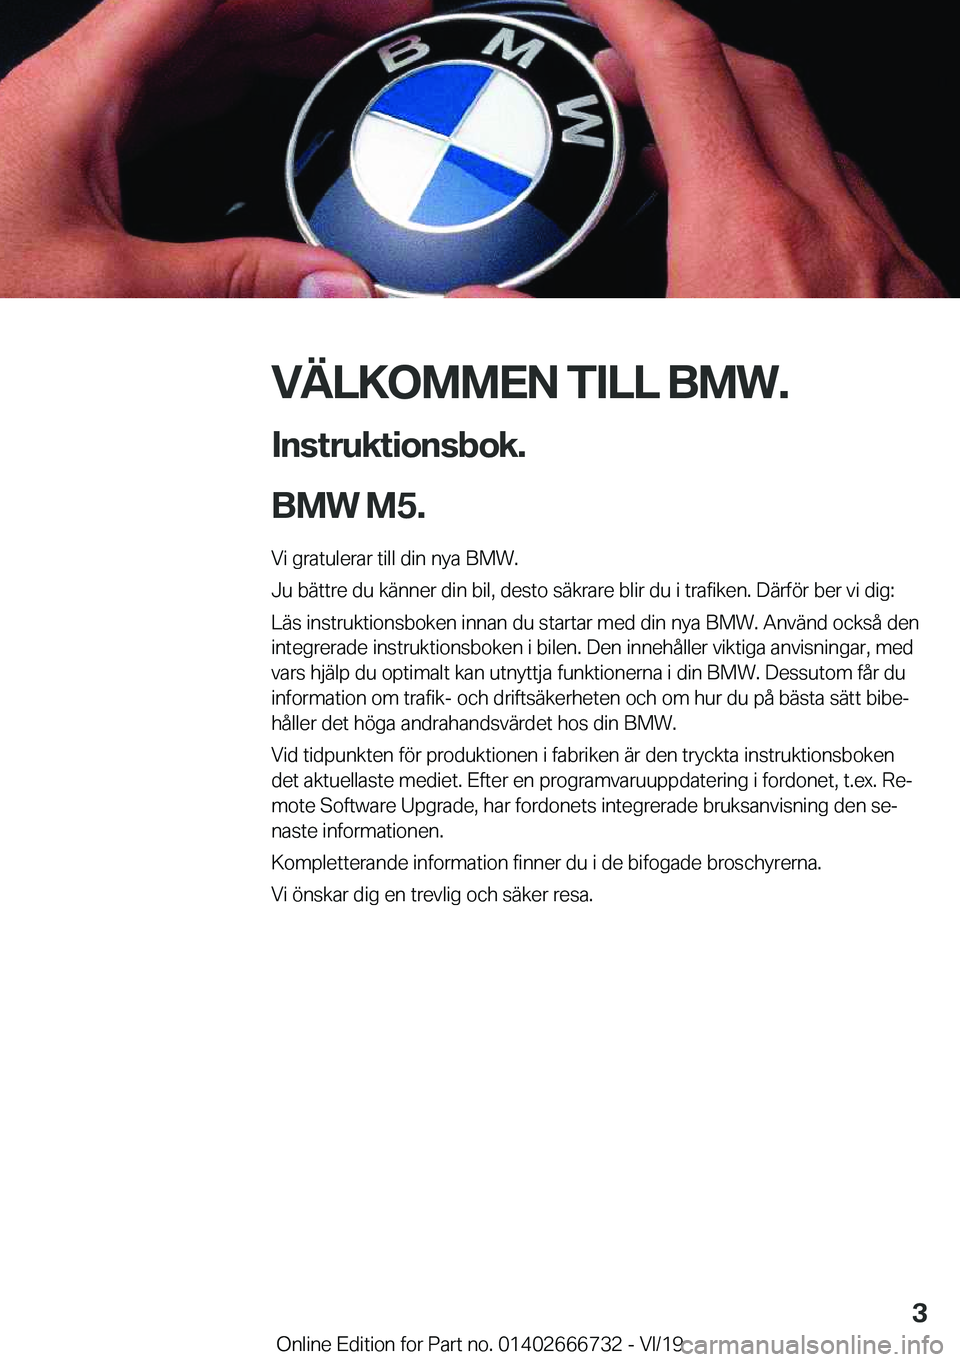 BMW M5 2020  InstruktionsbÖcker (in Swedish) �V�Ä�L�K�O�M�M�E�N��T�I�L�L��B�M�W�.�I�n�s�t�r�u�k�t�i�o�n�s�b�o�k�.
�B�M�W��M�5�.
�V�i��g�r�a�t�u�l�e�r�a�r��t�i�l�l��d�i�n��n�y�a��B�M�W�.
�J�u��b�ä�t�t�r�e��d�u��k�ä�n�n�e�r��d�i�n�